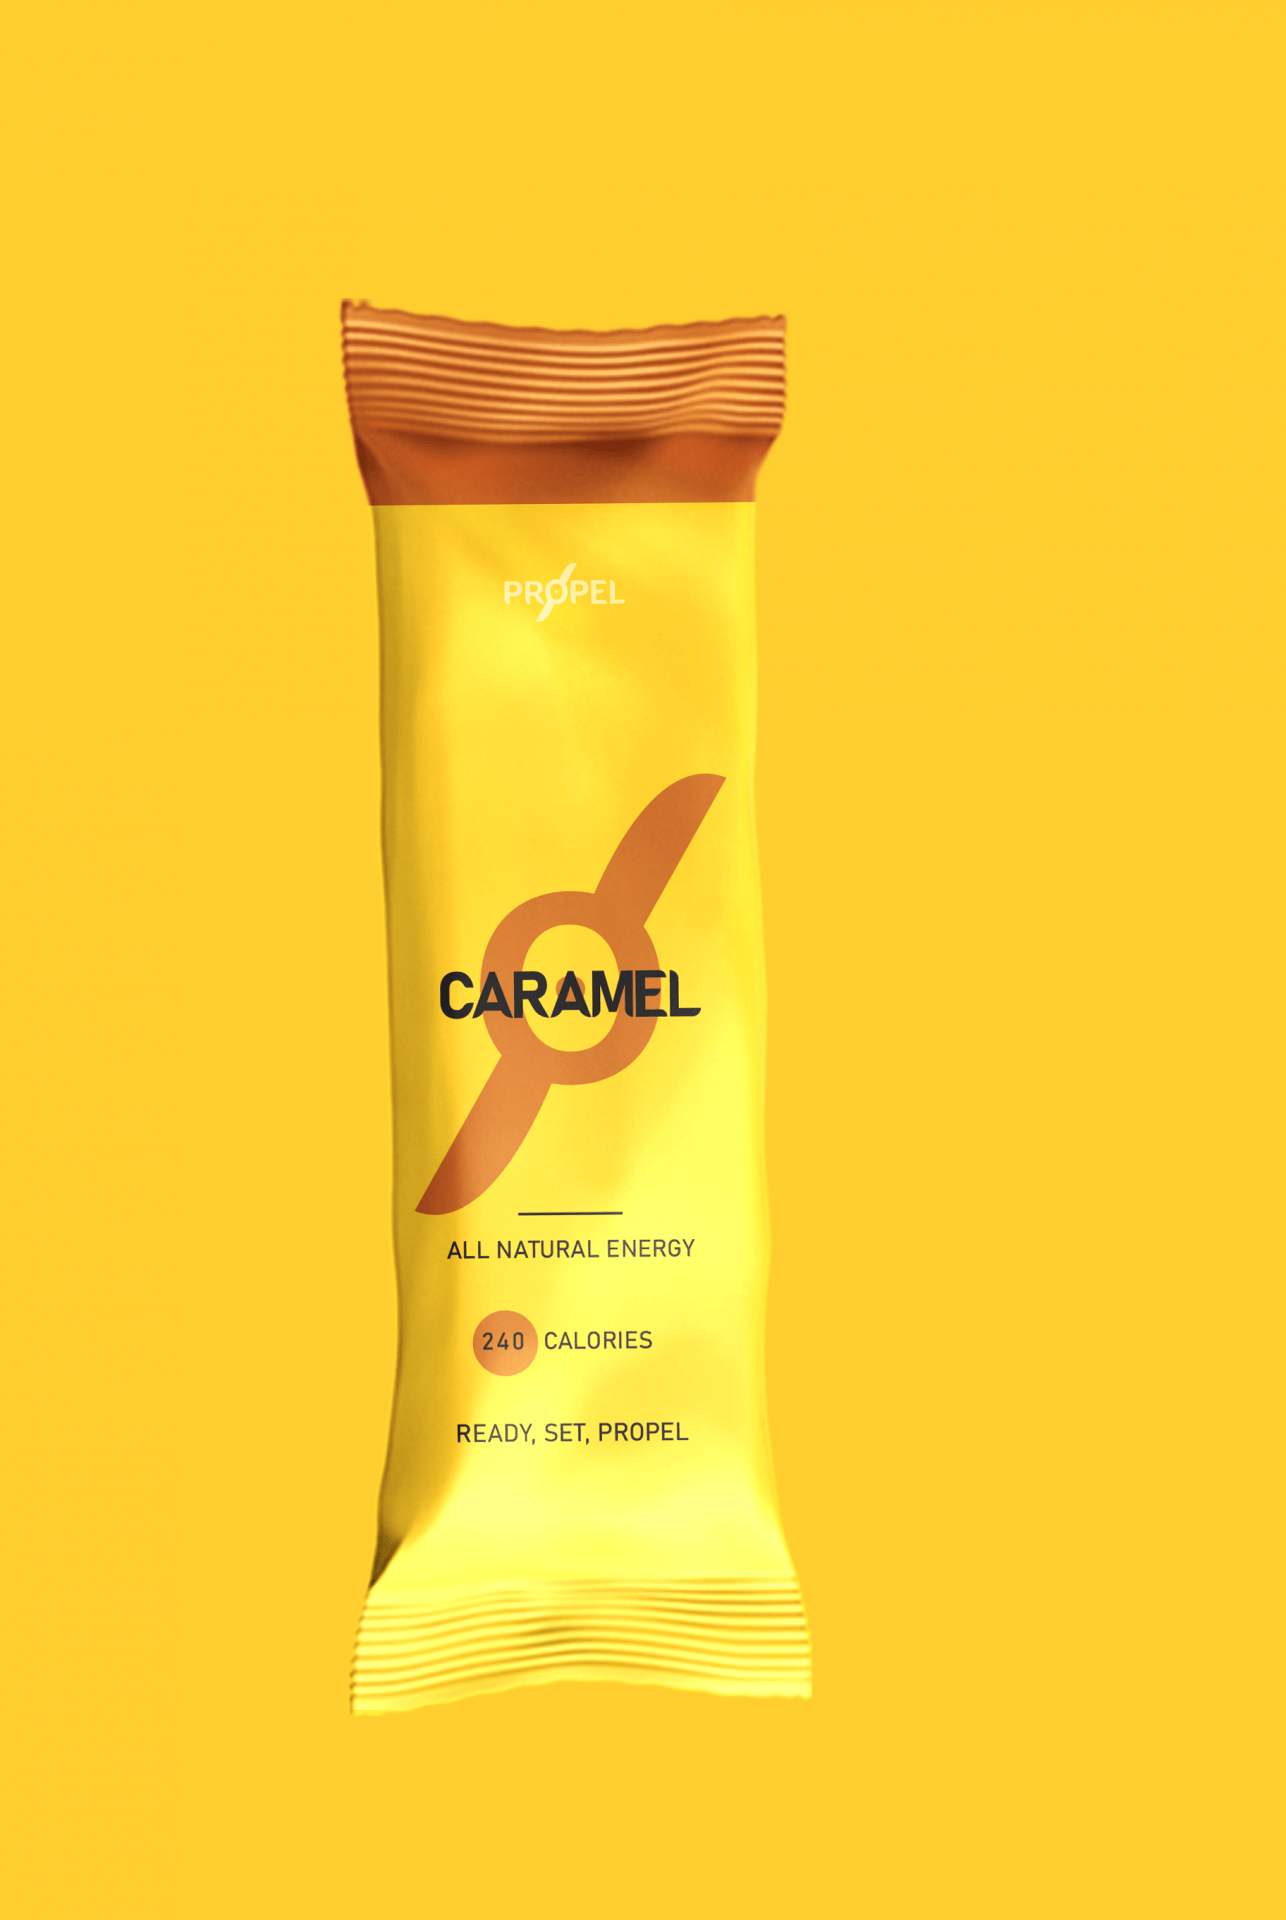 Yellow packaged caramel energy bar.